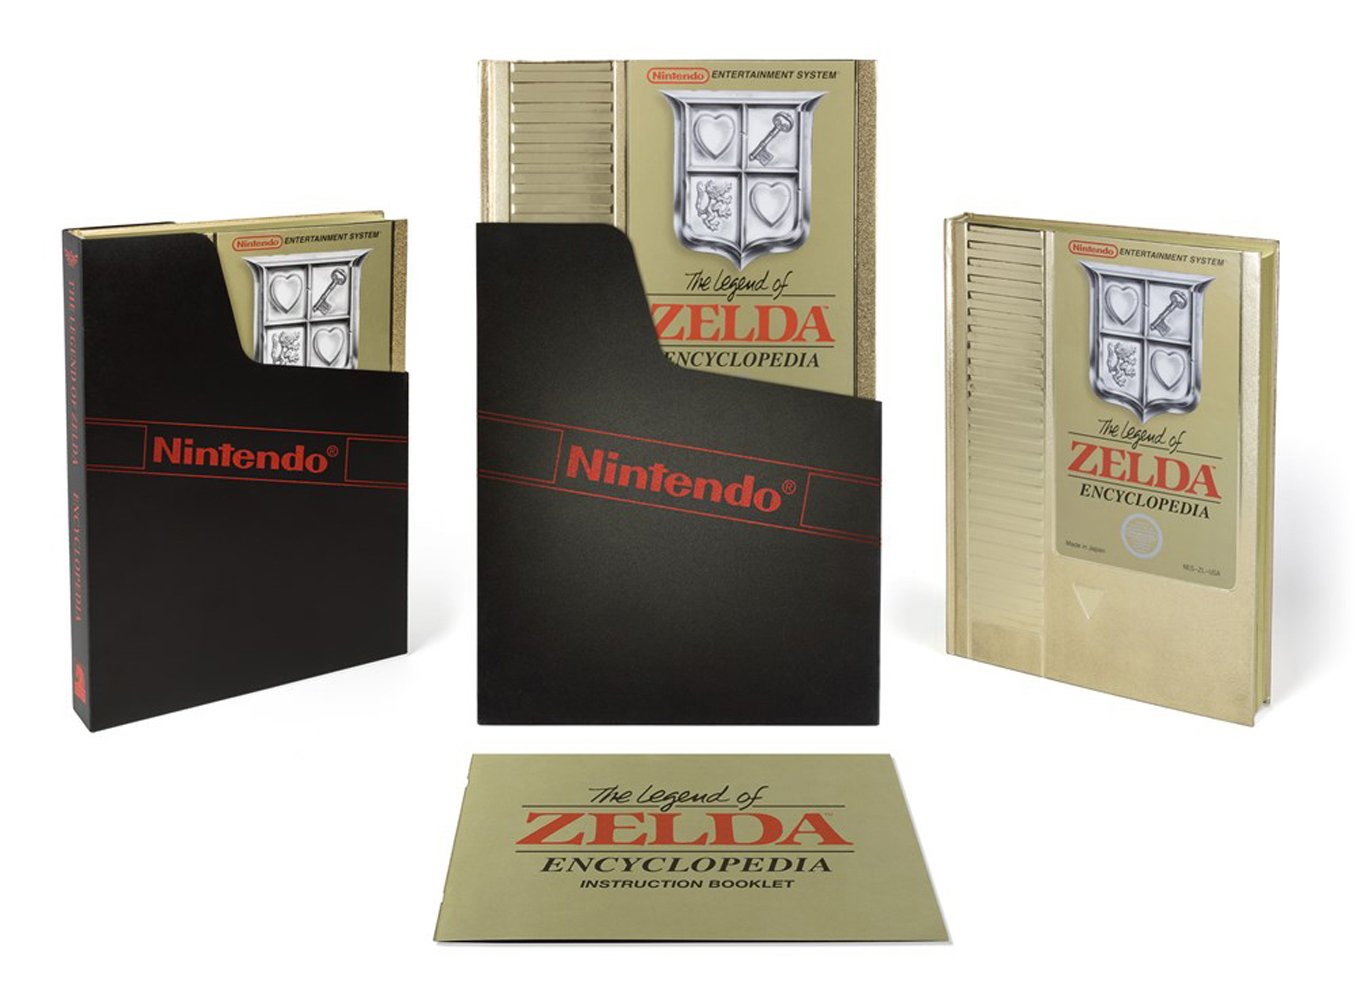 Enciclopédia de Zelda - The Legend of Zelda Encyclopedia Deluxe Edition - Blog Farofeiros